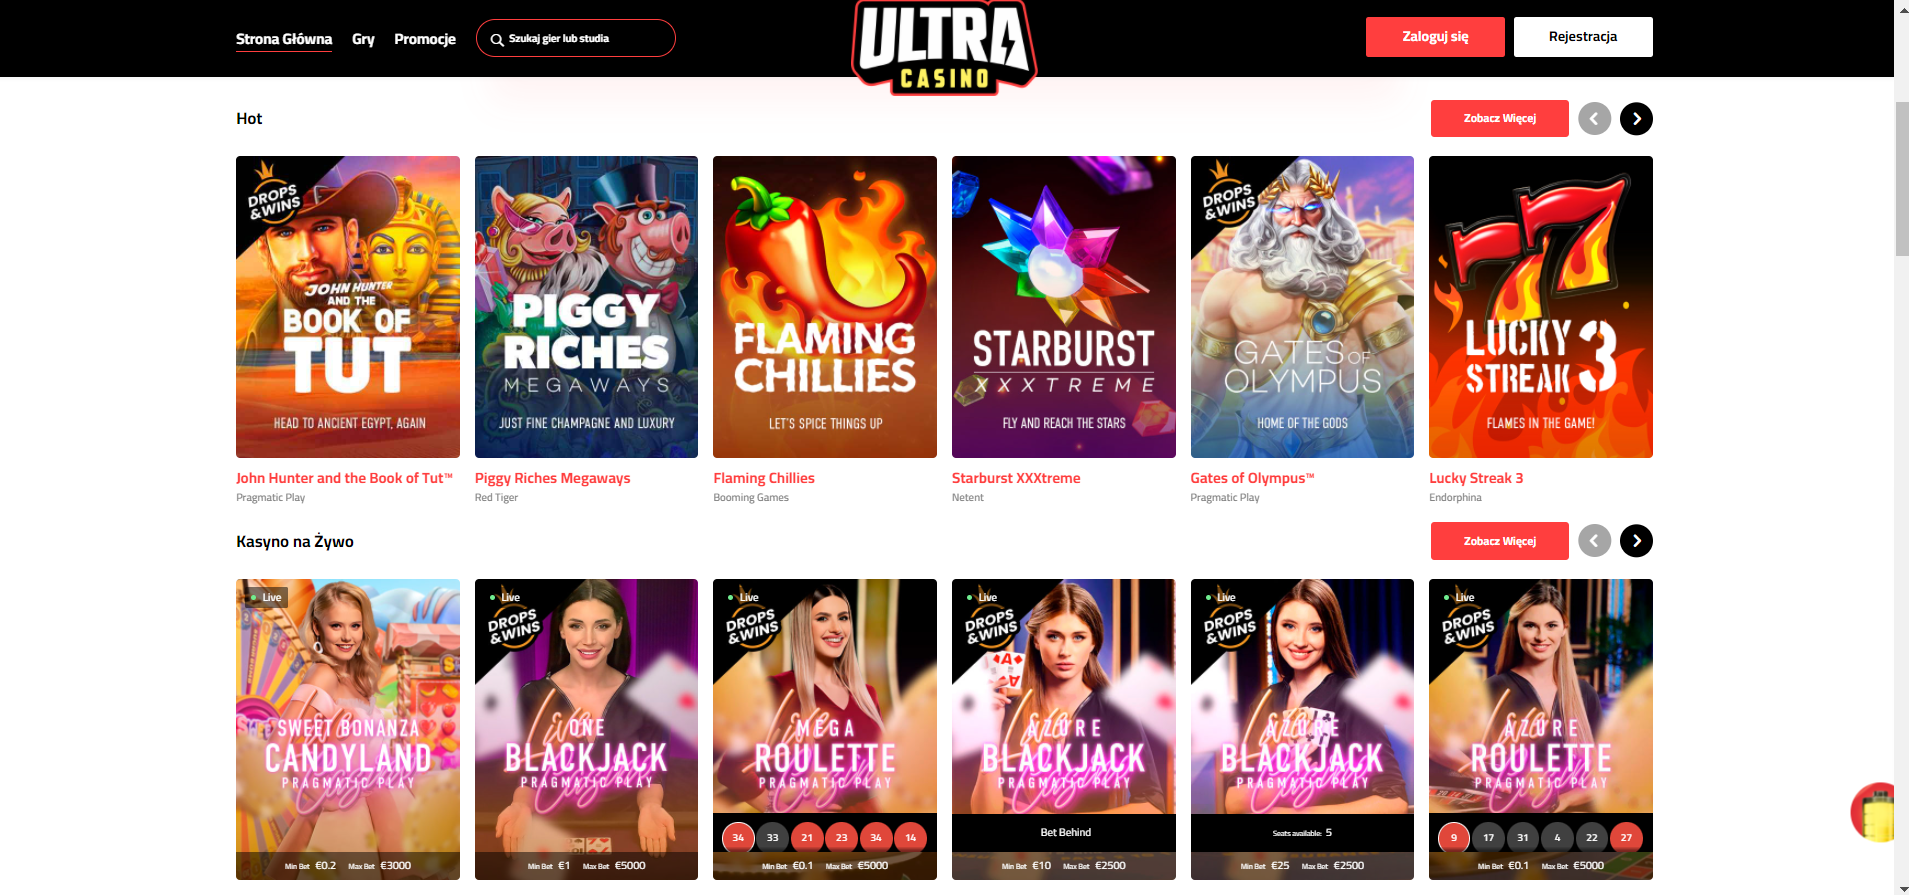 Ultra Casino Online